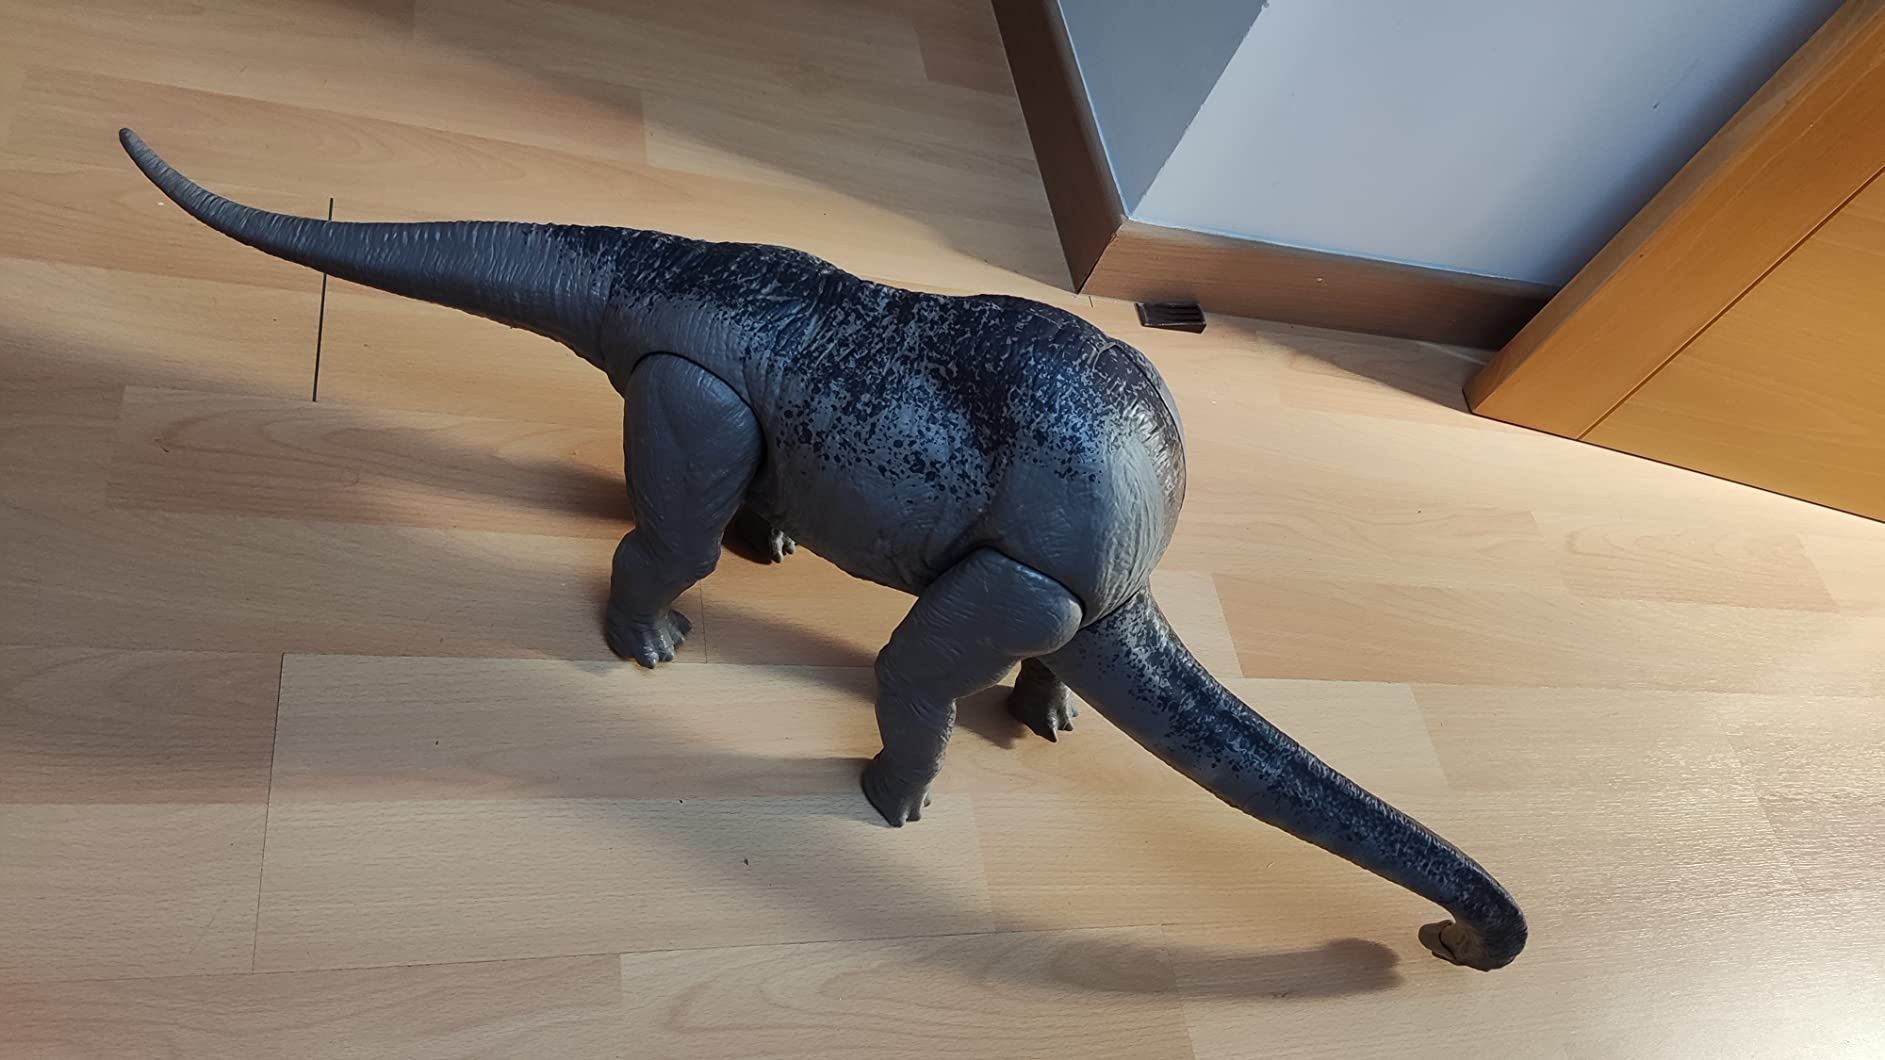 Jurassic World Brachiosaurus dinossauro articulado 106 cm gigante NOVO